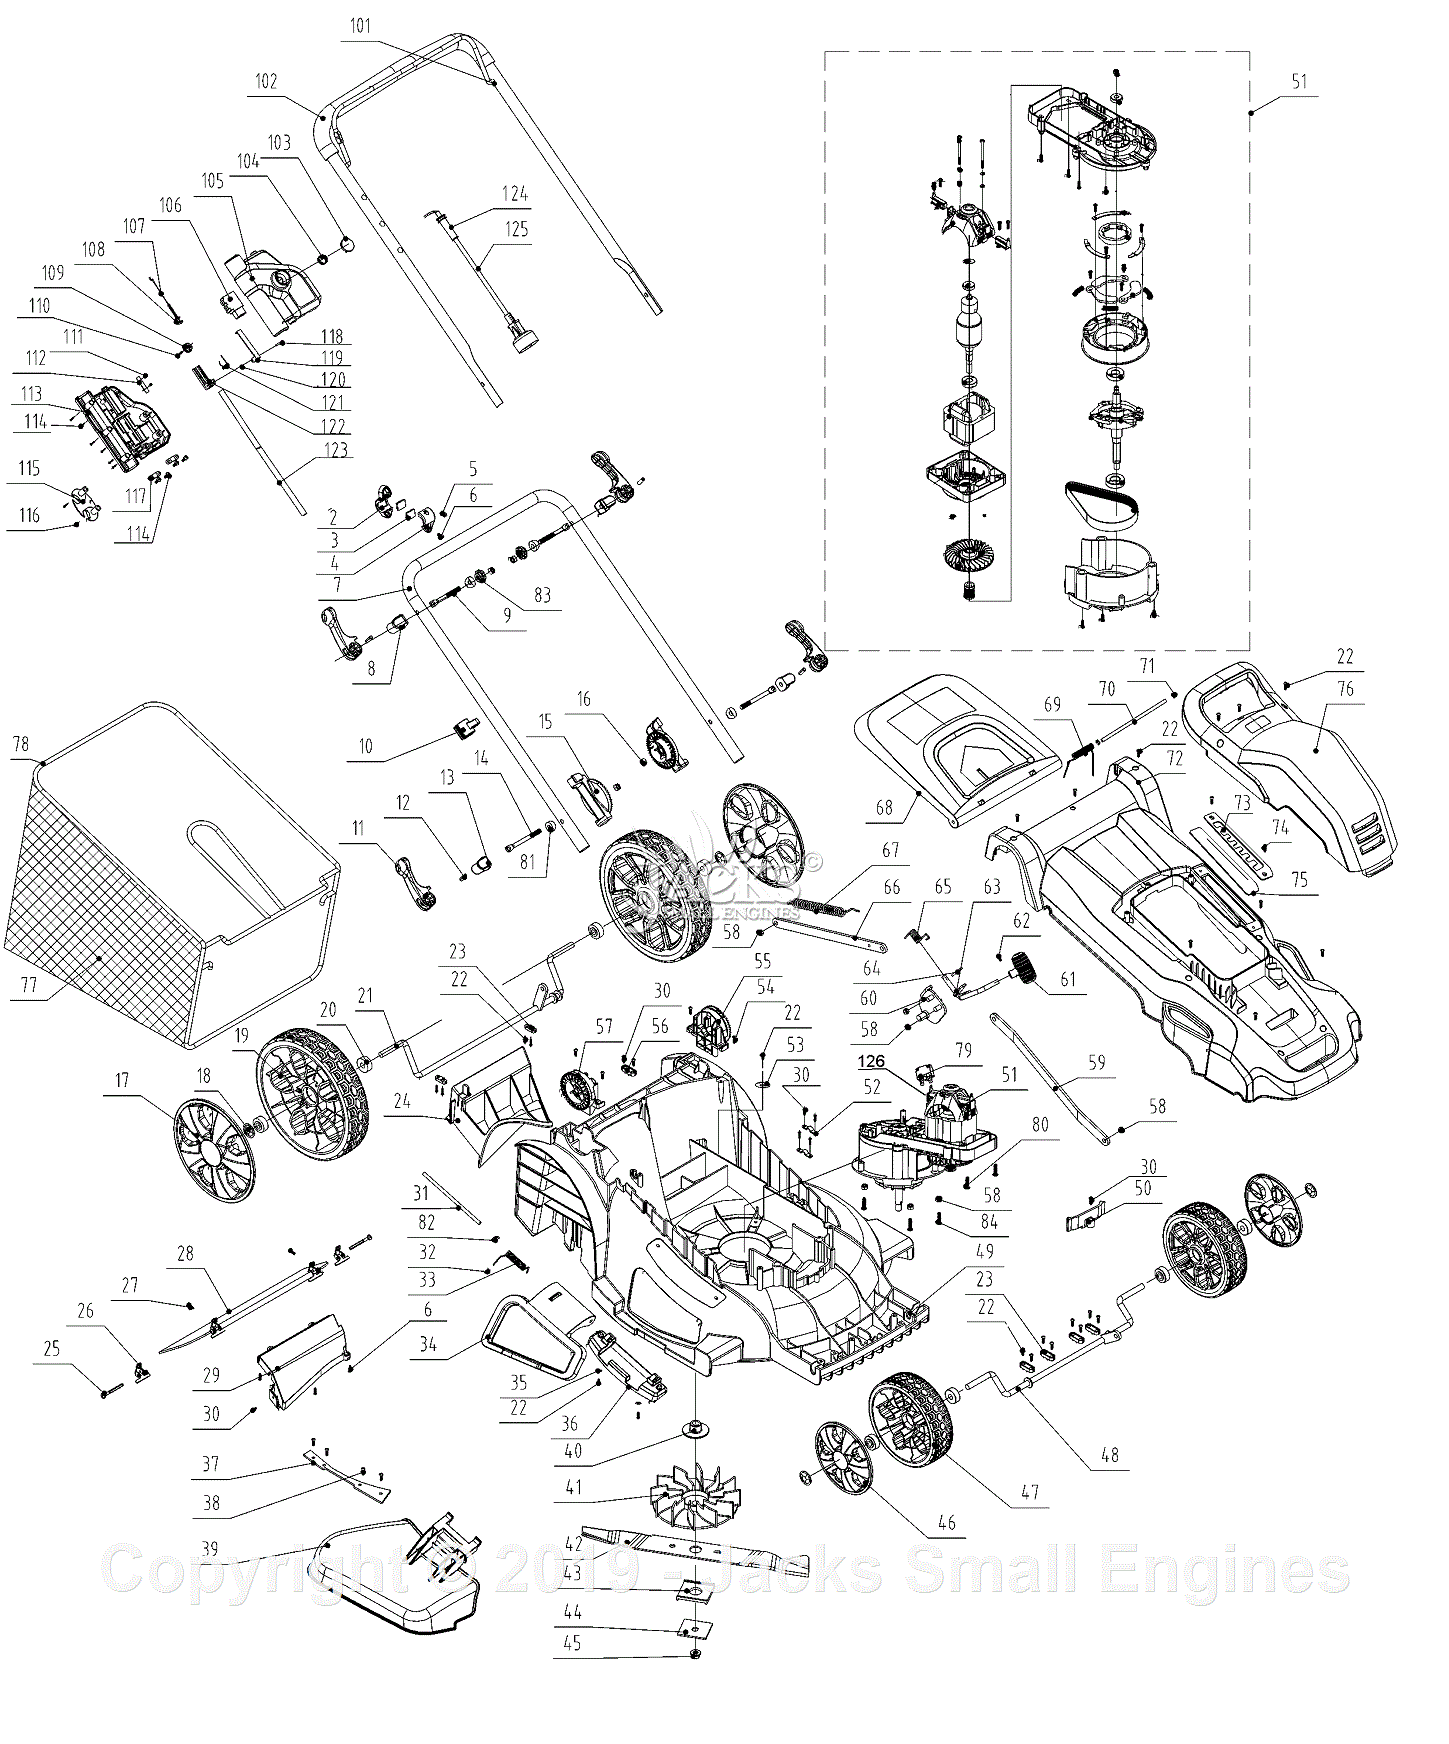 https://az417944.vo.msecnd.net/diagrams/manufacturer/black-decker/lawn-mower/mm2000-type-2/mower/diagram_17.gif